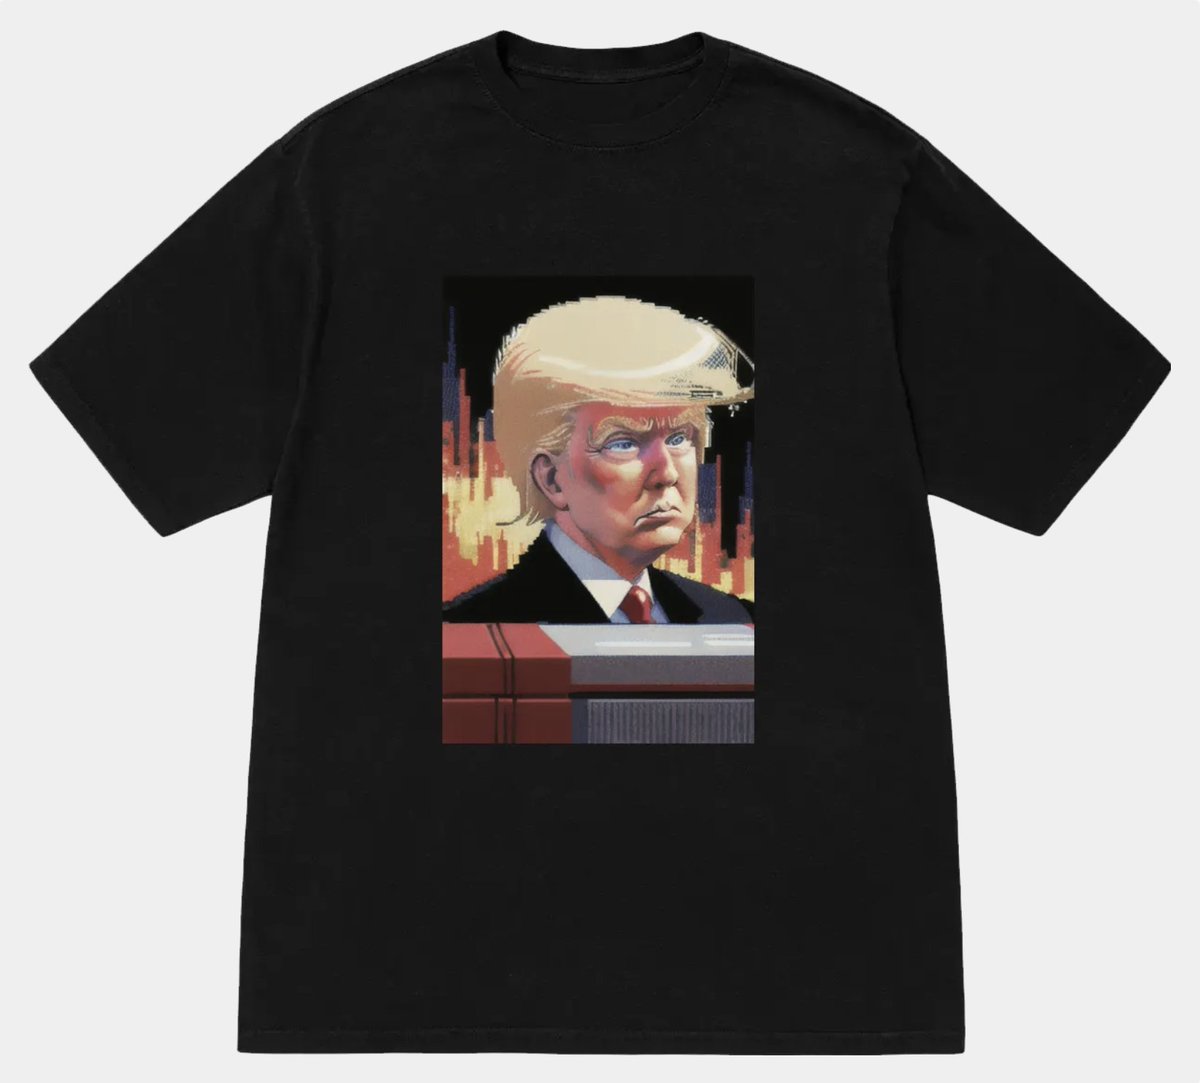 prompt: Donald Trump
model: pixel art
nex-vibe.com

#ai
#aiart
#generativeart
#aiclothing
#aishop
#aiclothingdesign
#aiclothes
#aiclothingstore
#clothes
#tshirts
#tshirtsdesign
#tshirtlovers
#tshirtstore
#phototshirt
#nexvibe
#streetwear
#donaldtrump
#pixelart